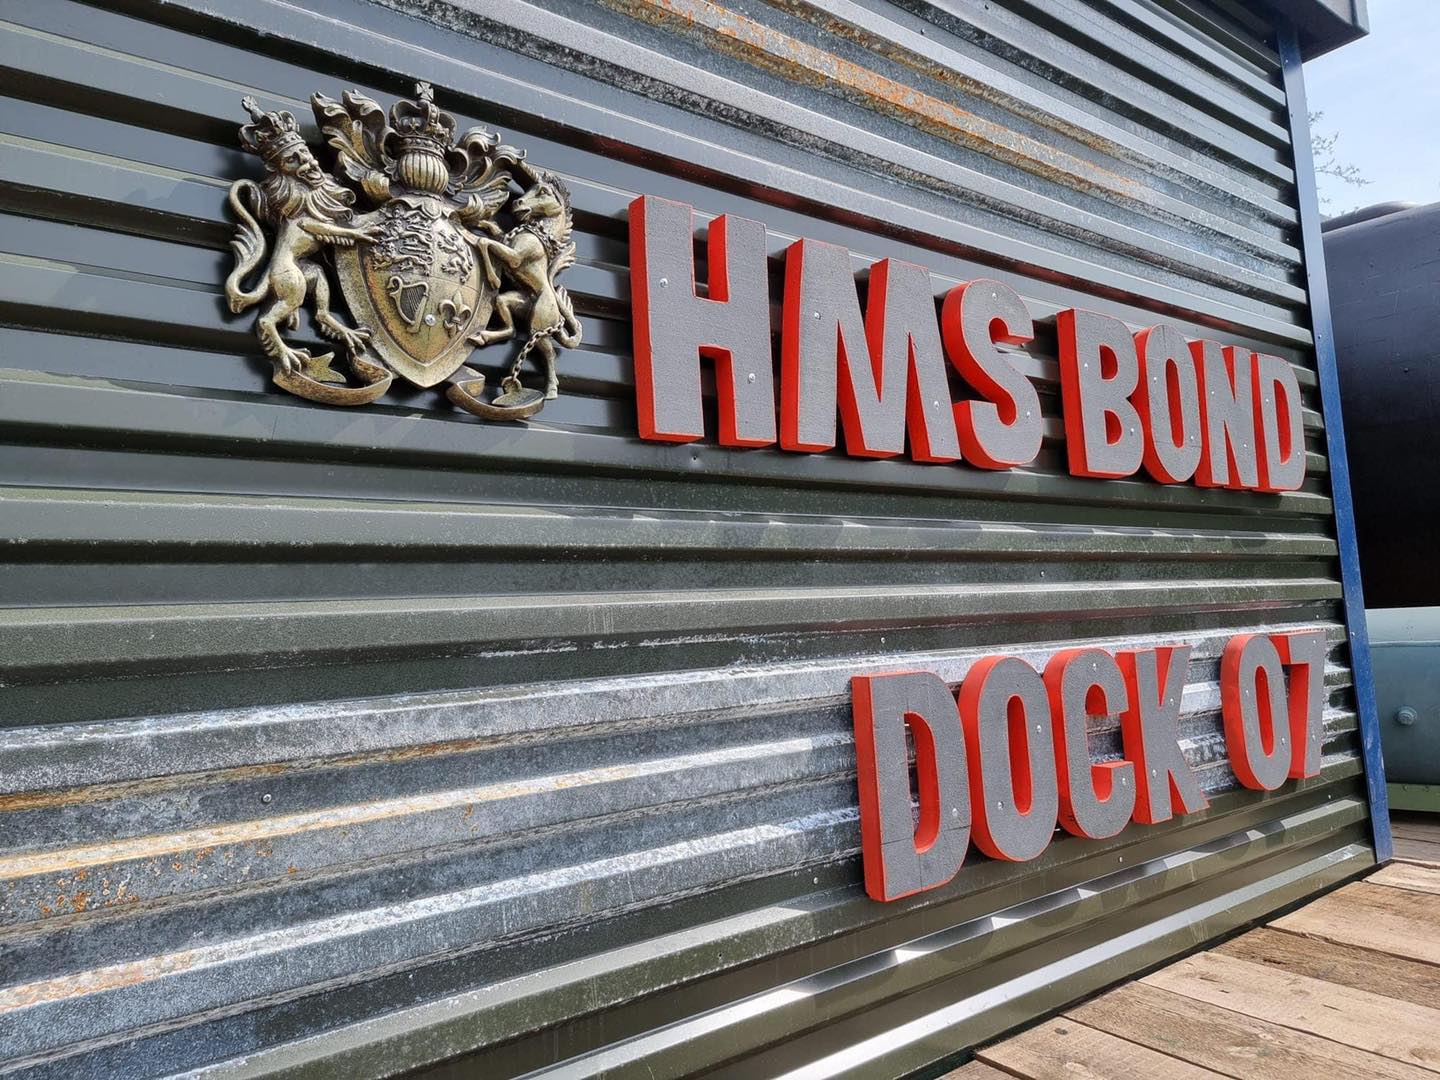 James Bonds Submarine & HMS Dock Summerhouse (3)